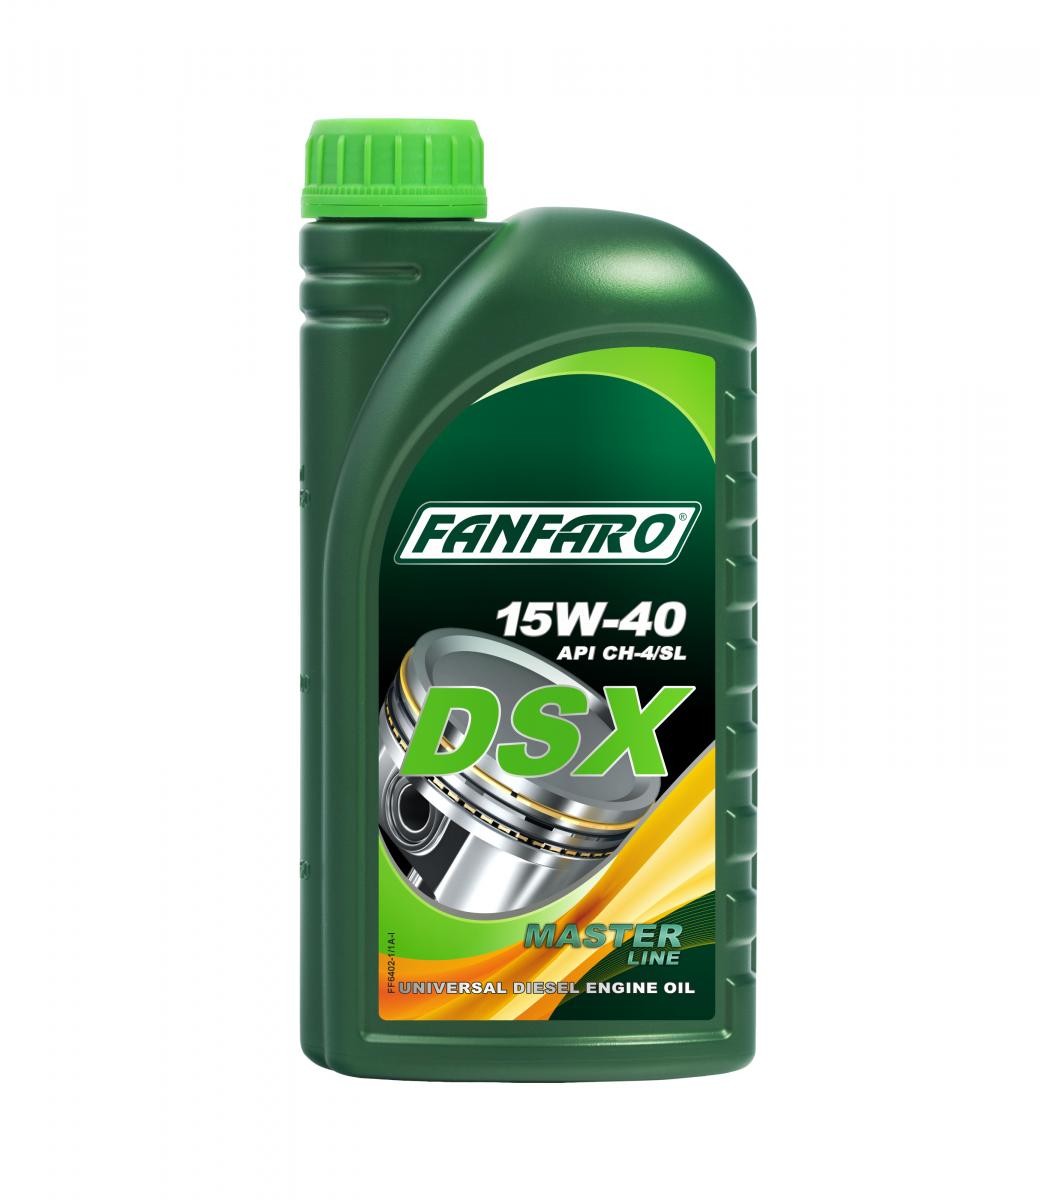 Aceite de motor MERCEDES-BENZ camion FANFAROFF6402-1 baratos online